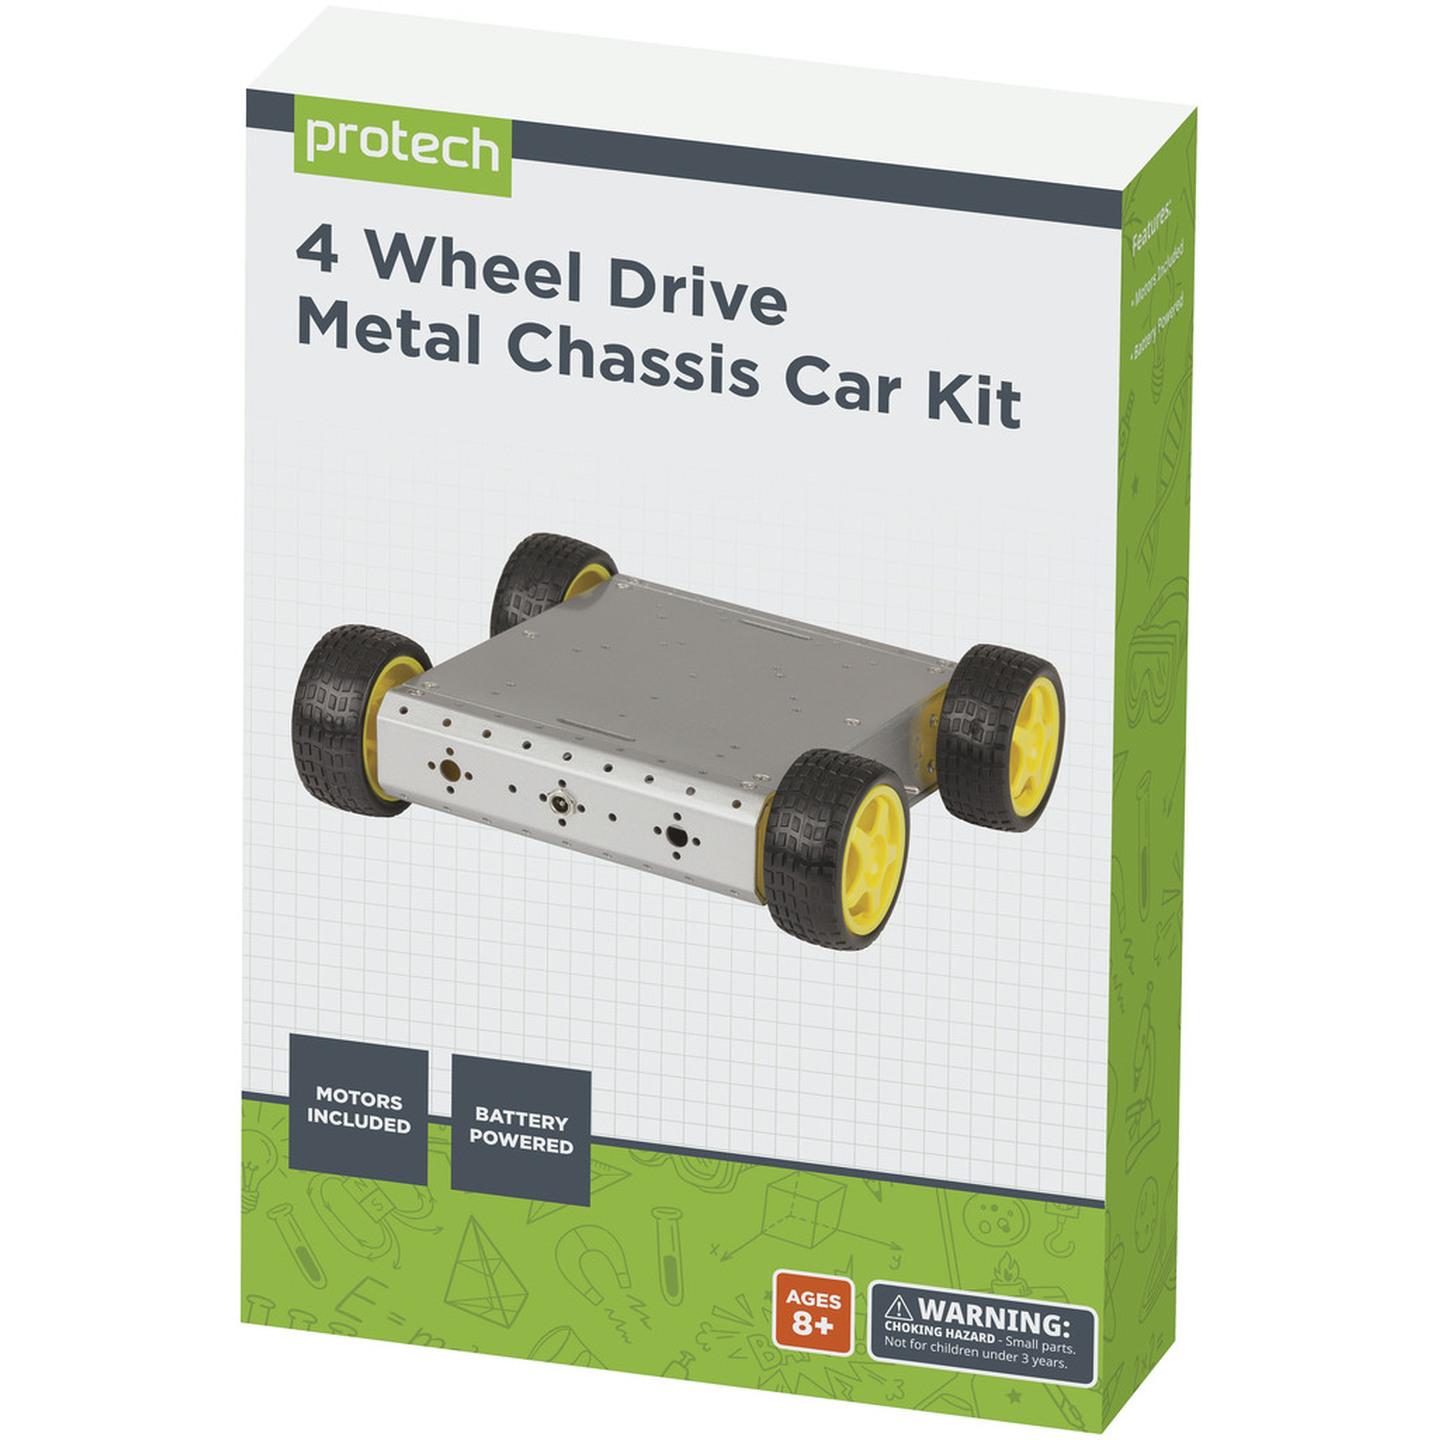 4 Wheel Drive Metal Chassis Car Kit